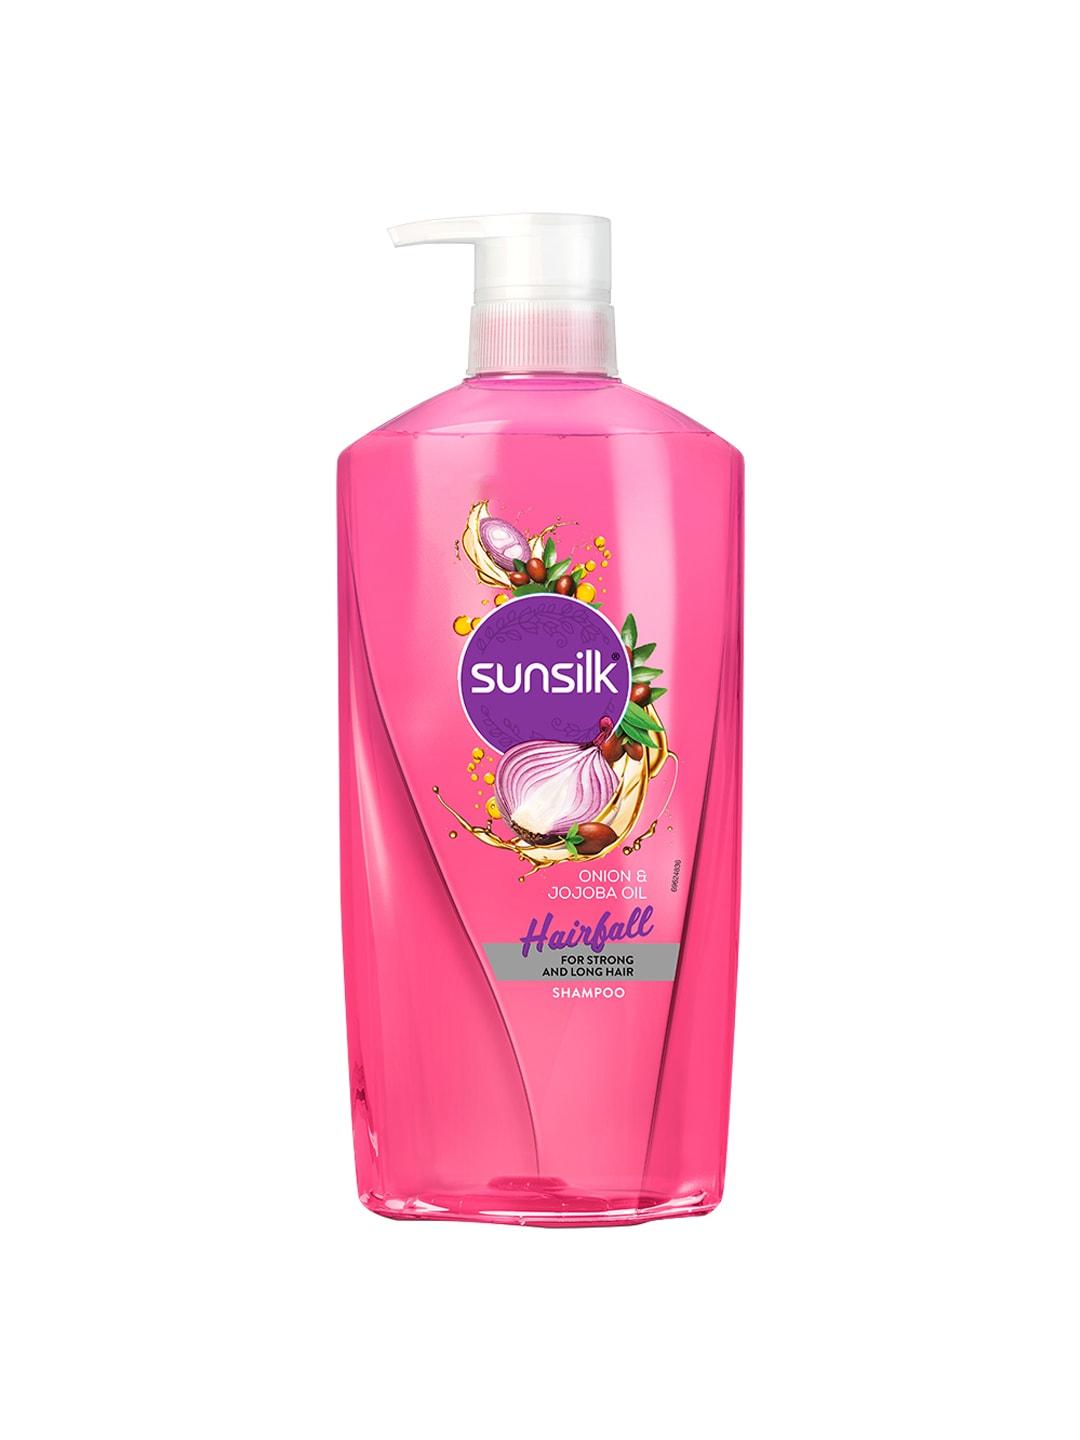 Sunsilk Onion & Jojoba Oil Hairfall Control Shampoo For Strong & Long Hair - 700ml